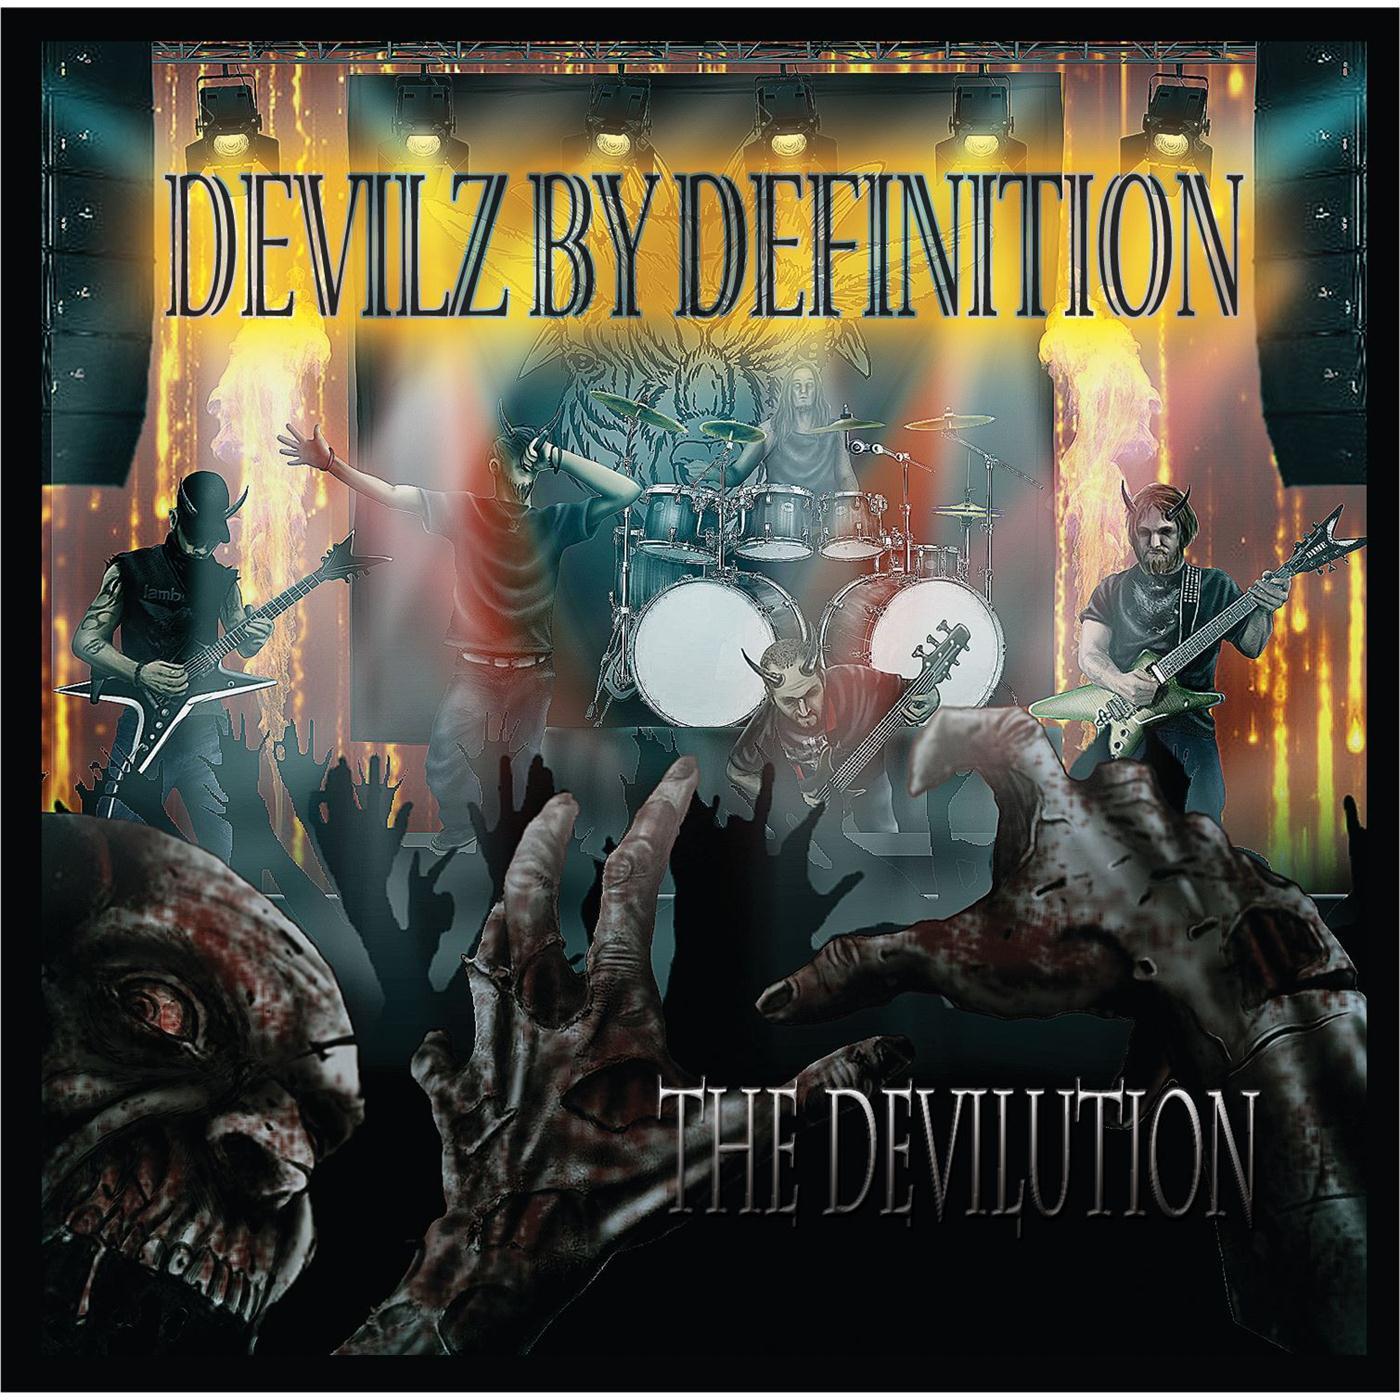 Devilz by Definition - The Pledge Project